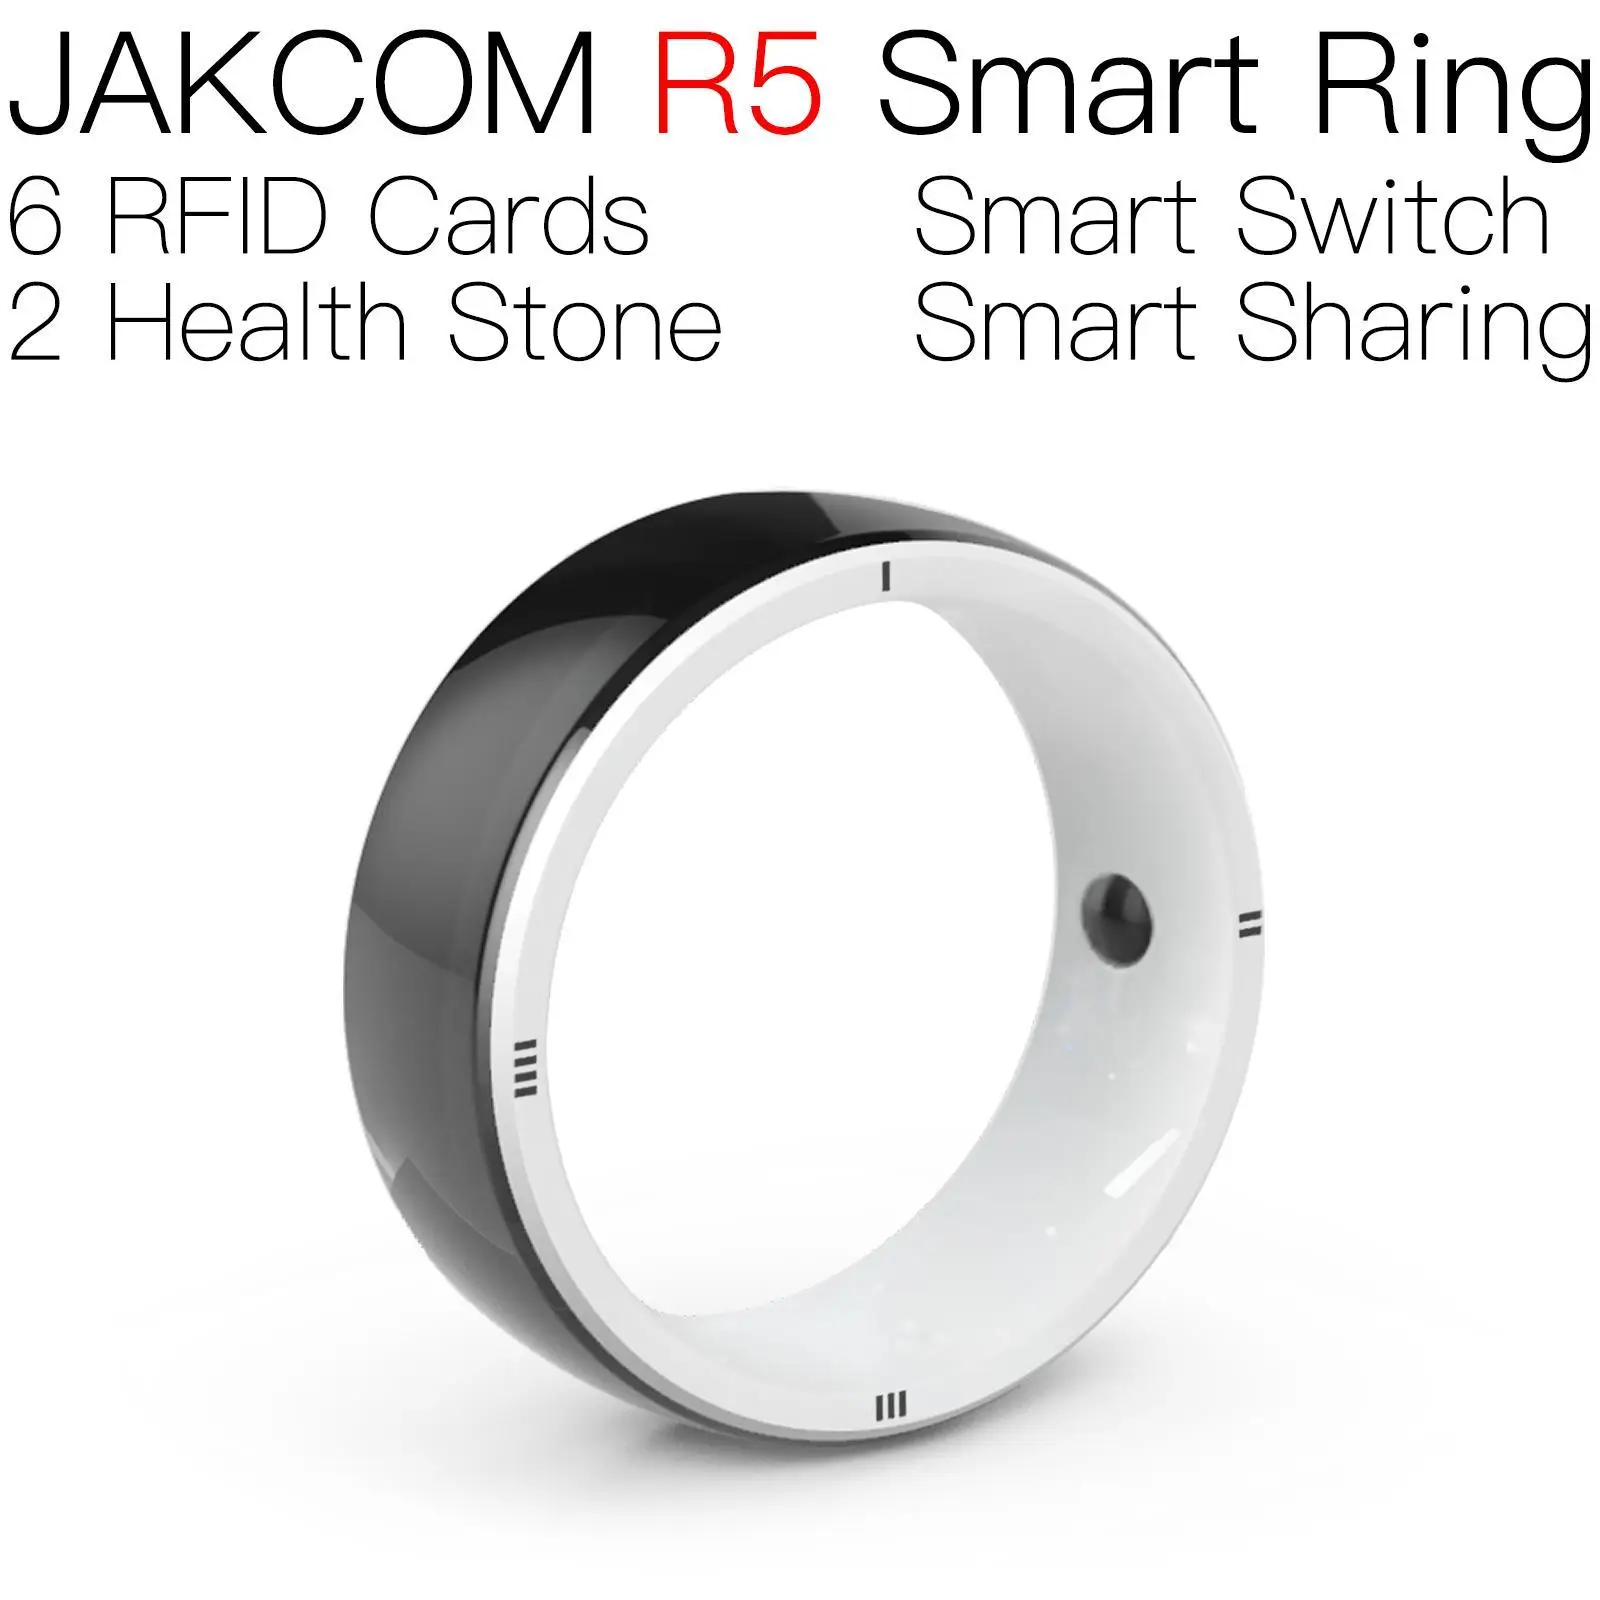 

JAKCOM R5 Smart Ring Newer than rfid card t5557 strong tag 125 copy tags key keyfob reading vhf uhf radio pos chip nfc